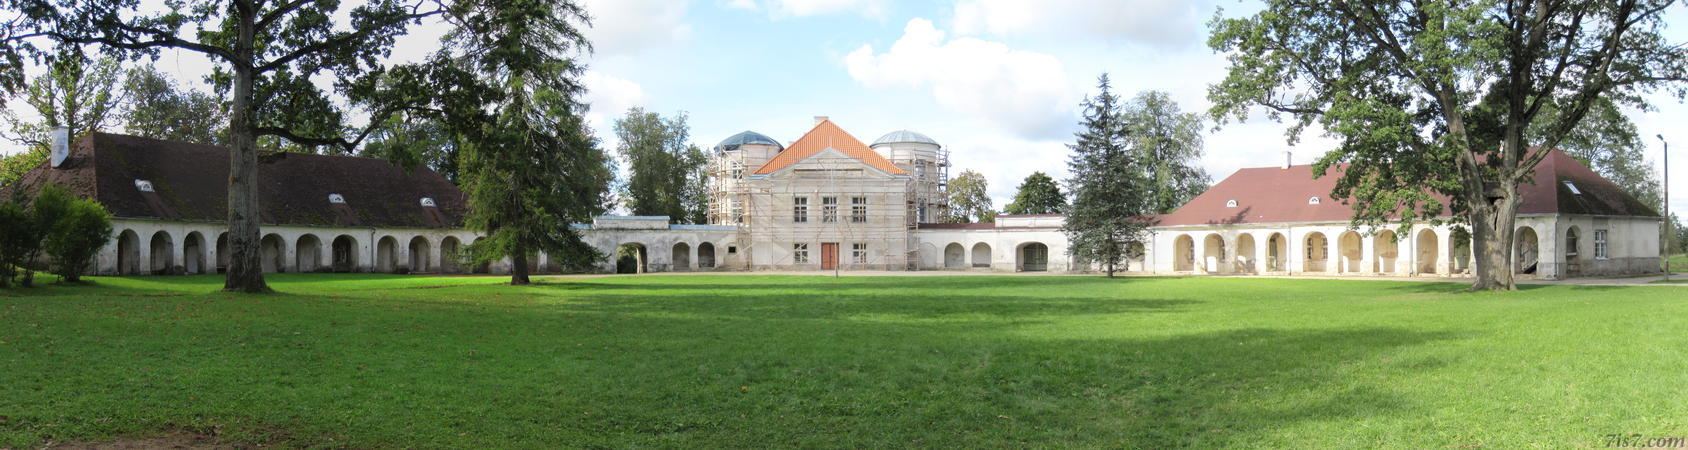 Kiltsi Manor